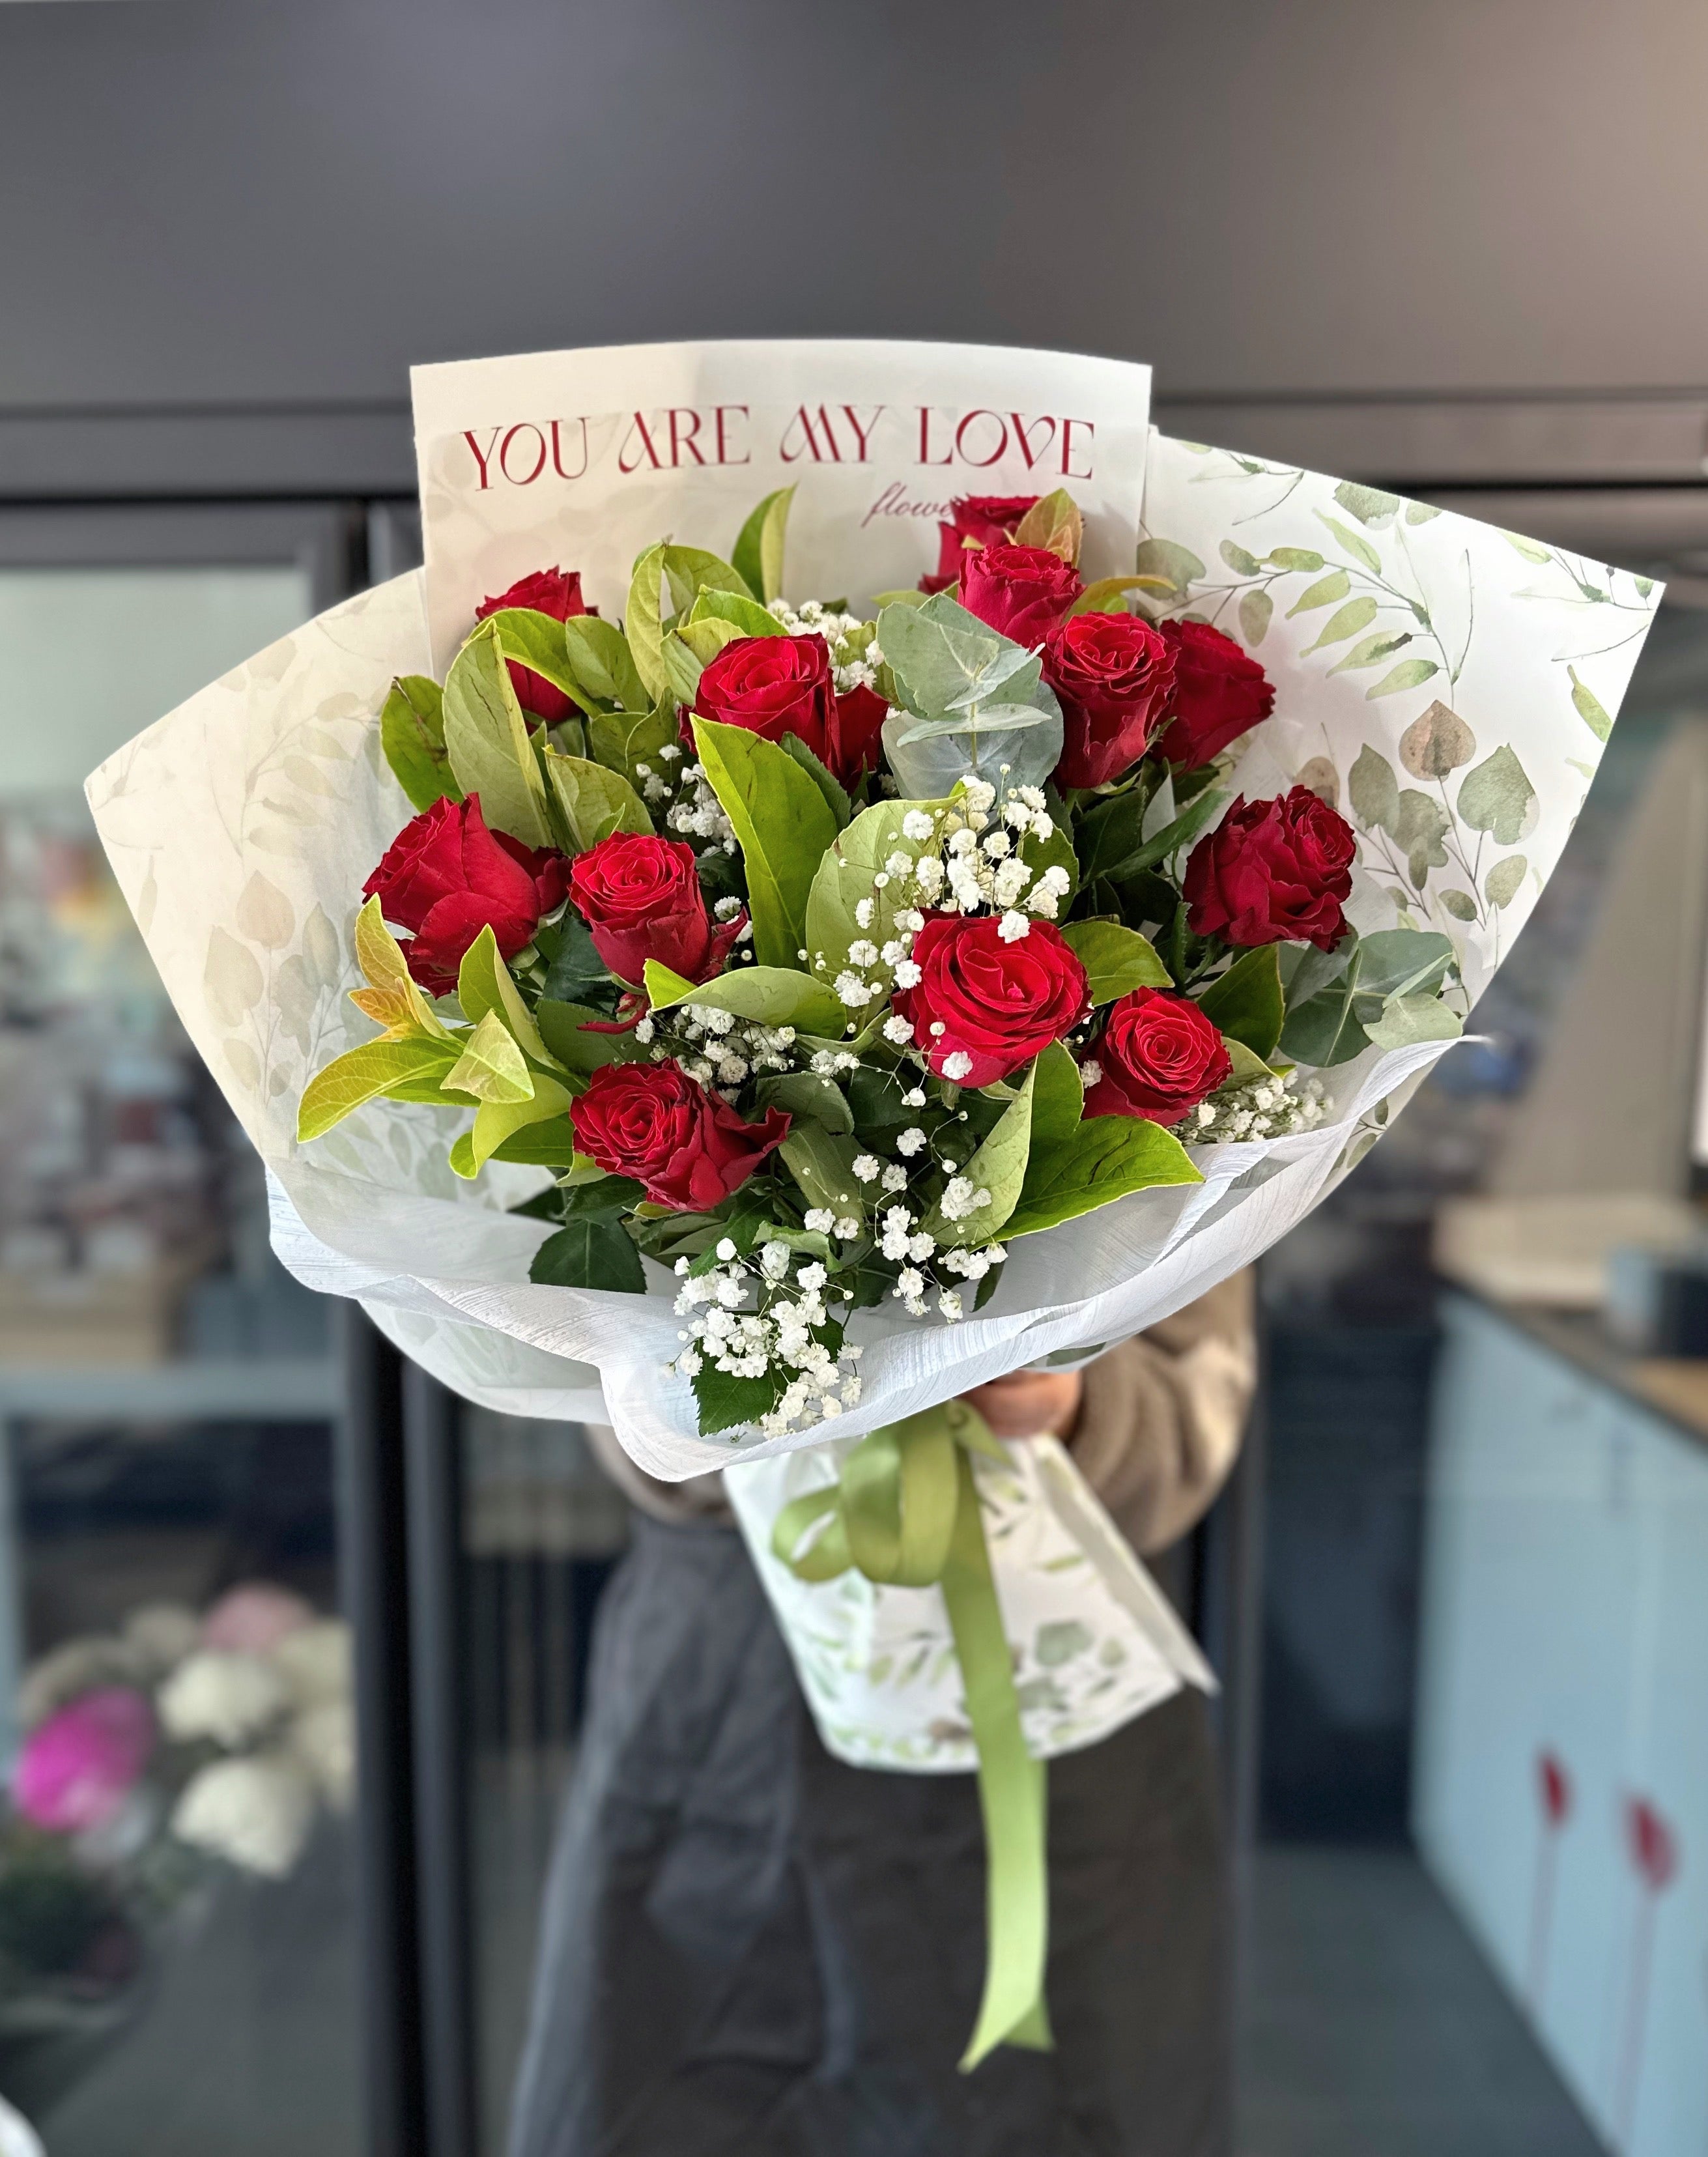 Valentine’s signature Bouquet-‘You are my love’ - Vermont Florist